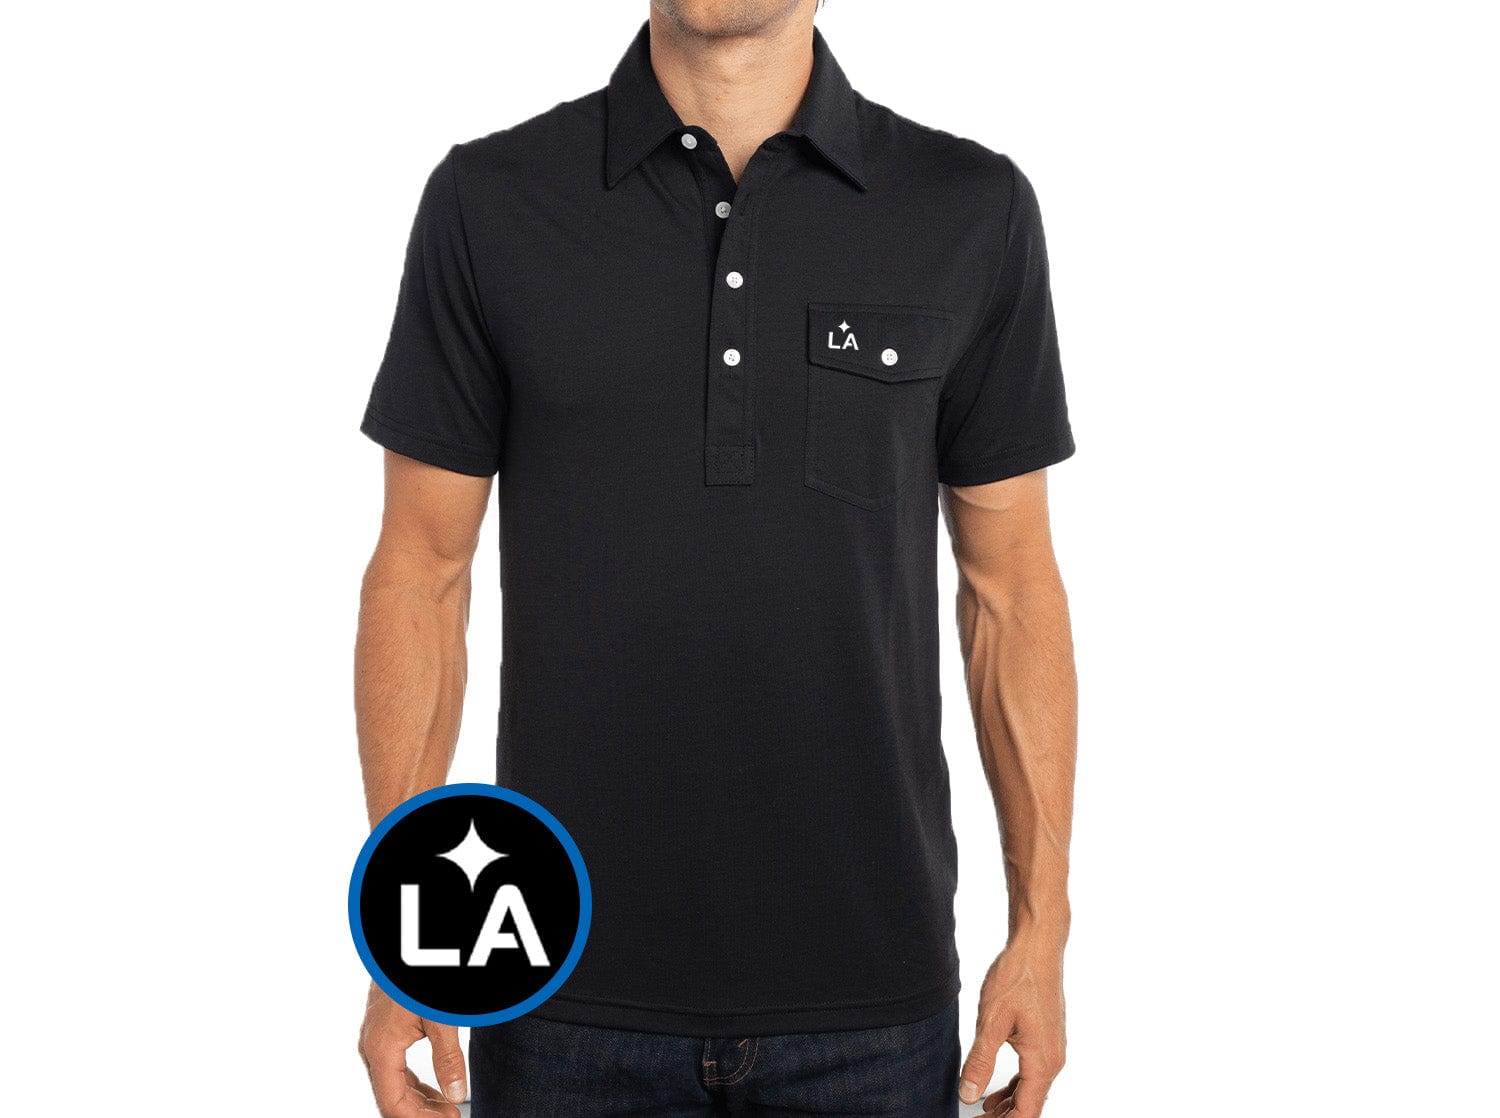 LA Galaxy - Performance Players Shirt - LA Star - Black